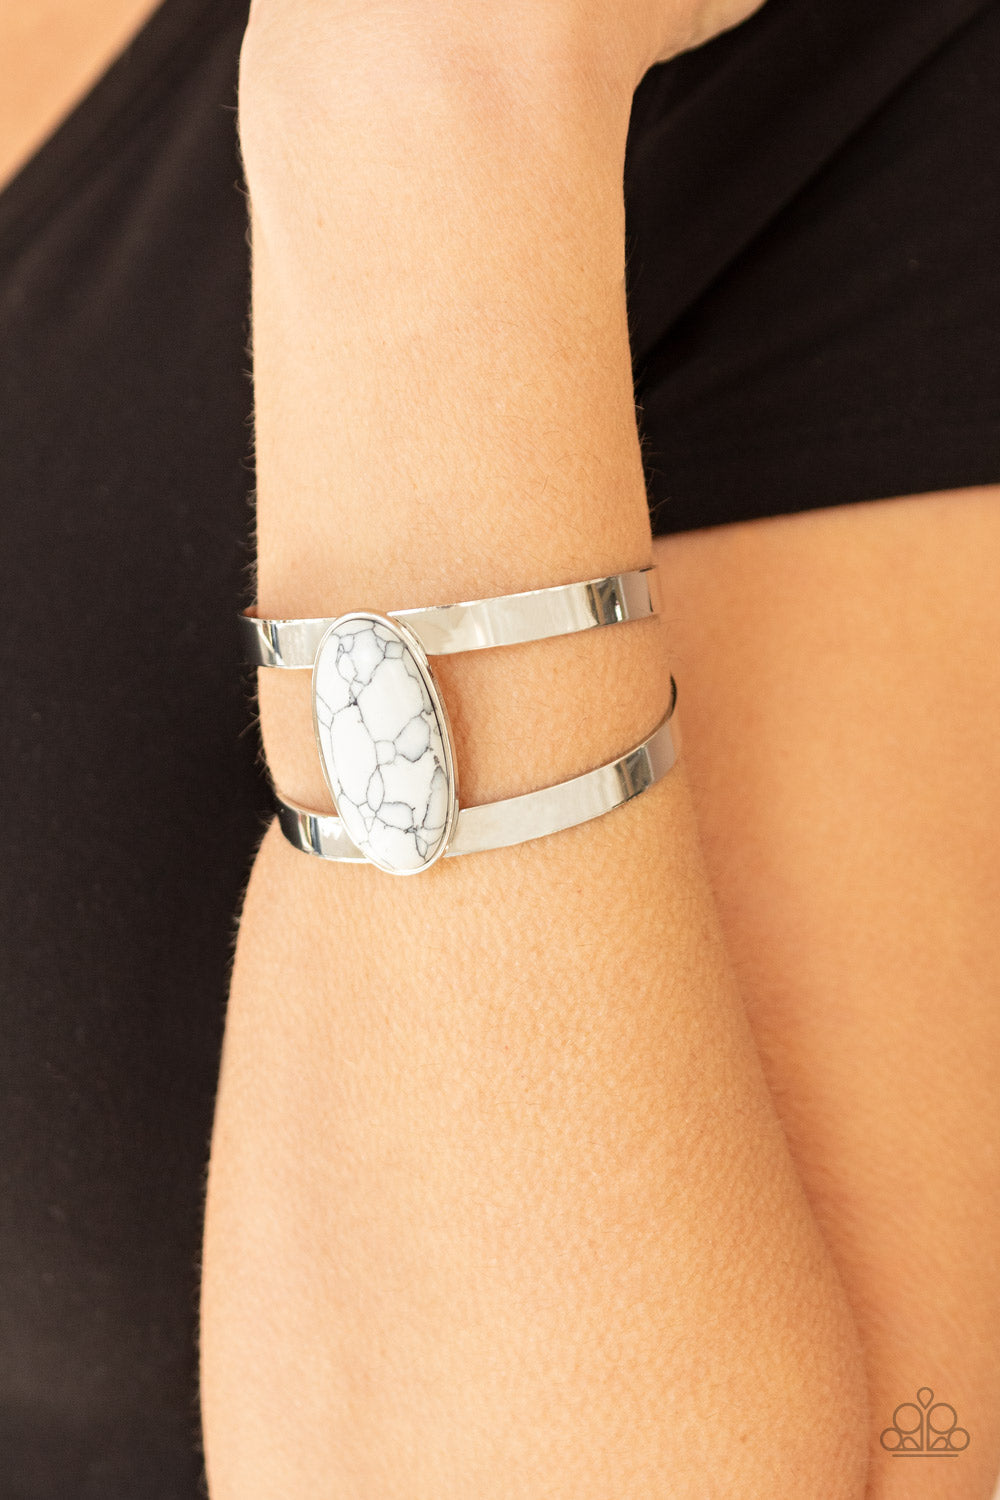 Paparazzi Quarry Queen - White Stone - Silver Cuff Bracelet - $5 Jewelry with Ashley Swint